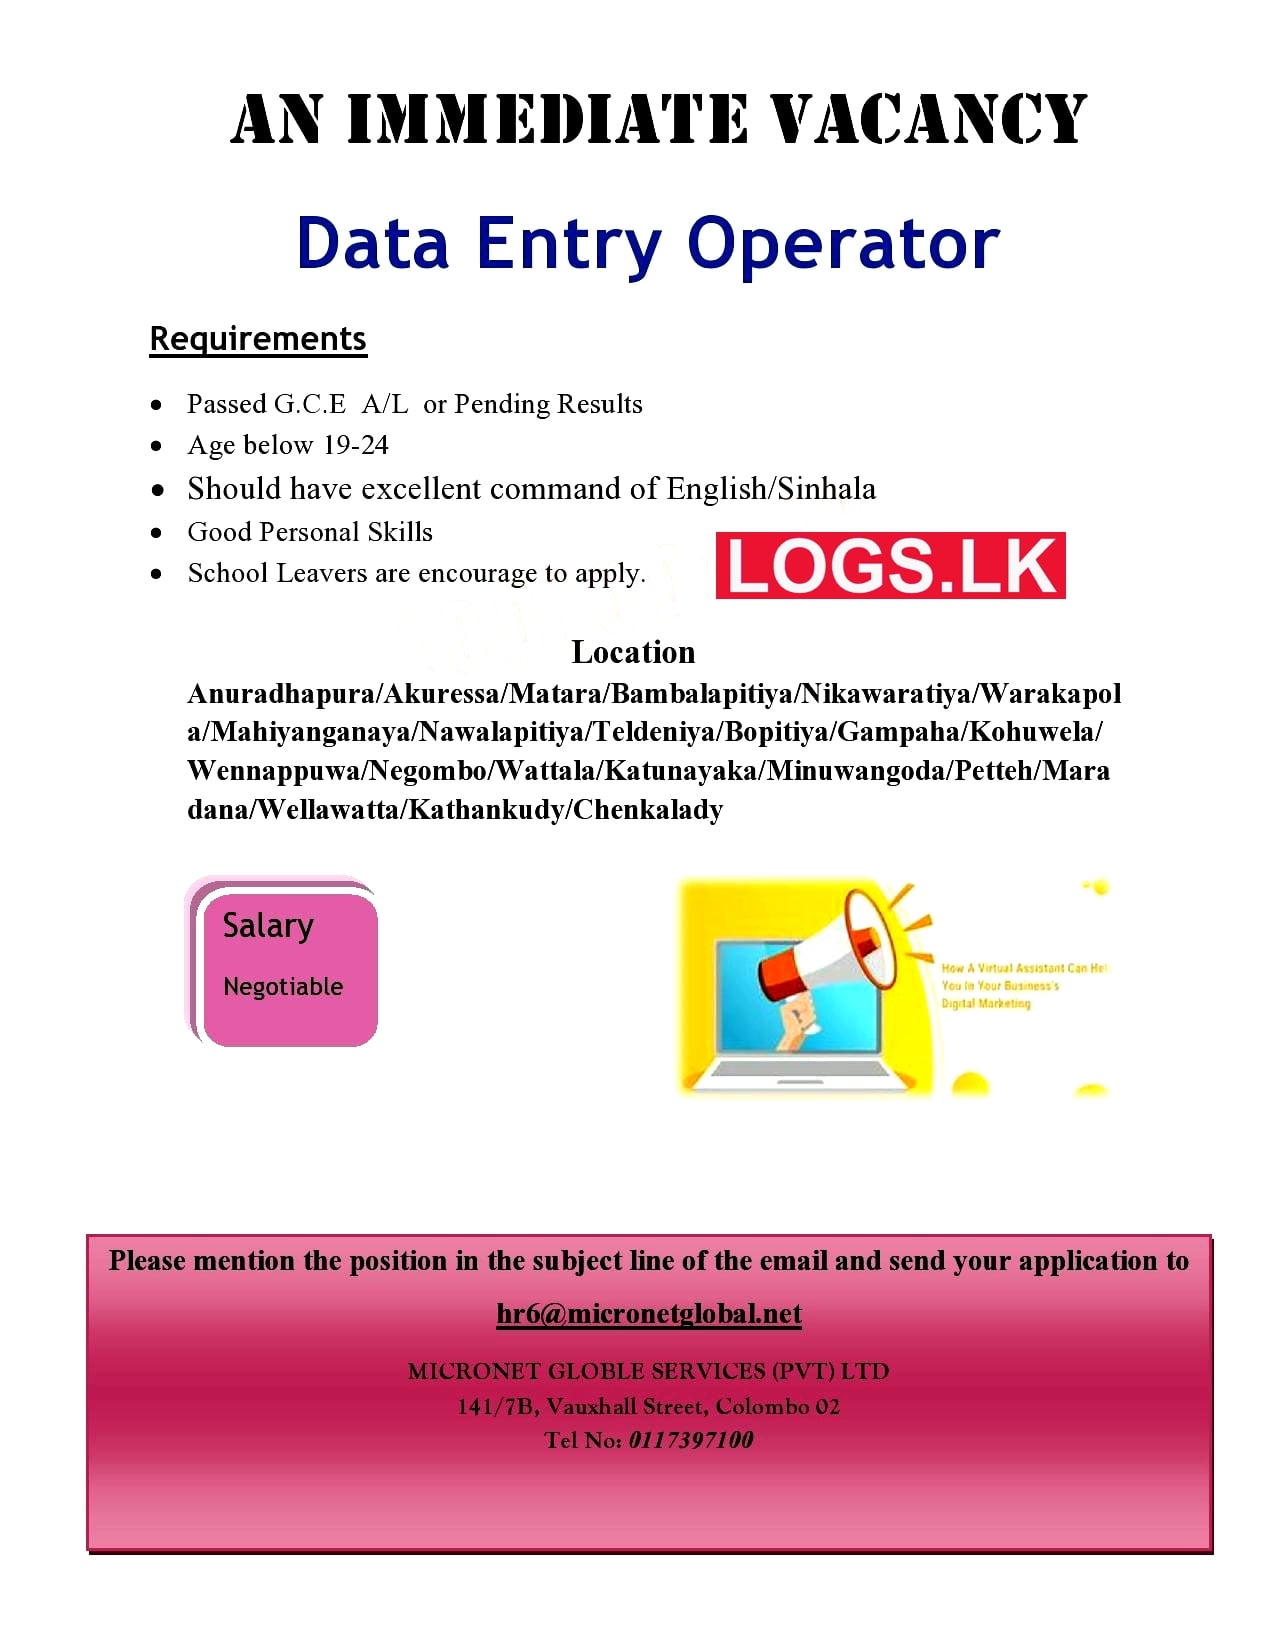 Data Entry Operator Job Vacancy 2023 Micronet Global Services Job Vacancies